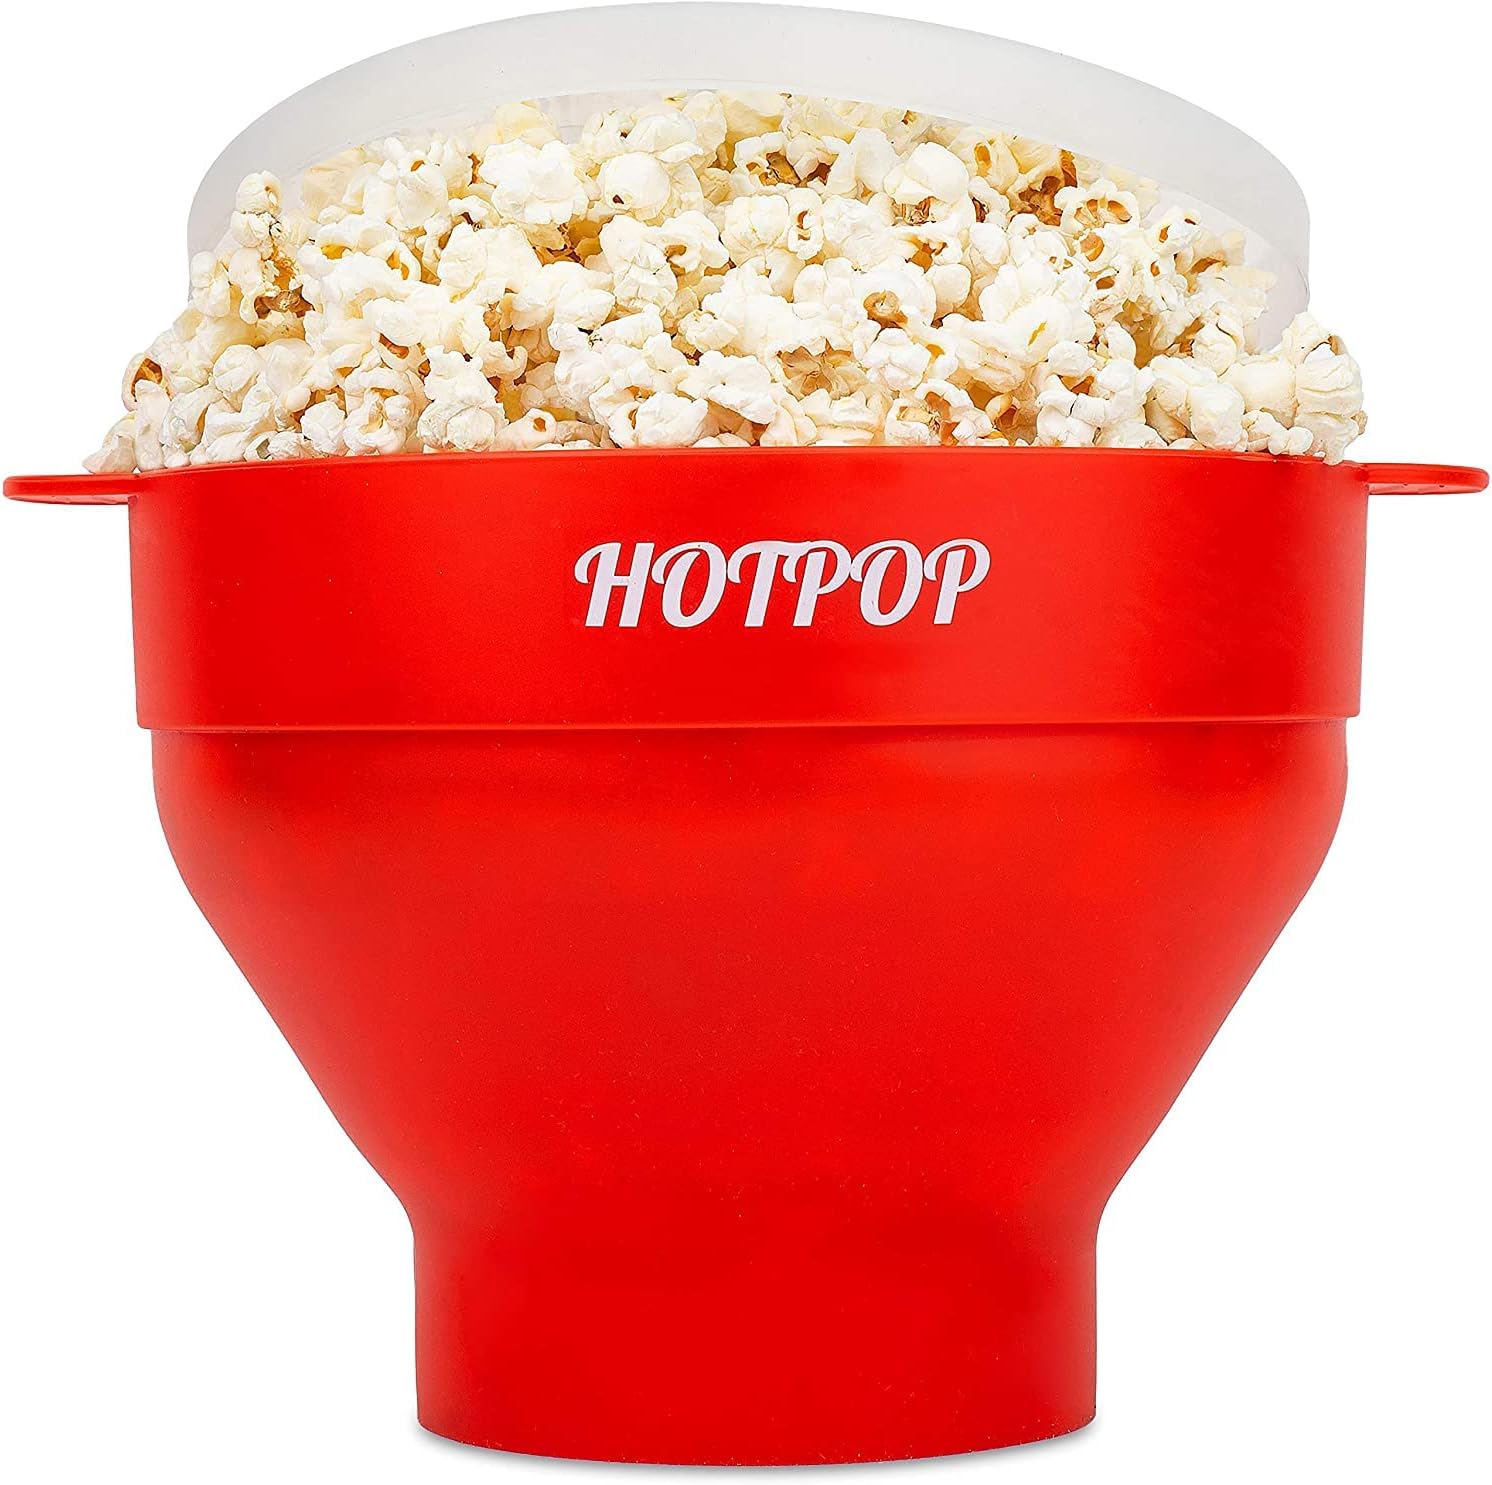 the original hotpop silicone microwave popcorn